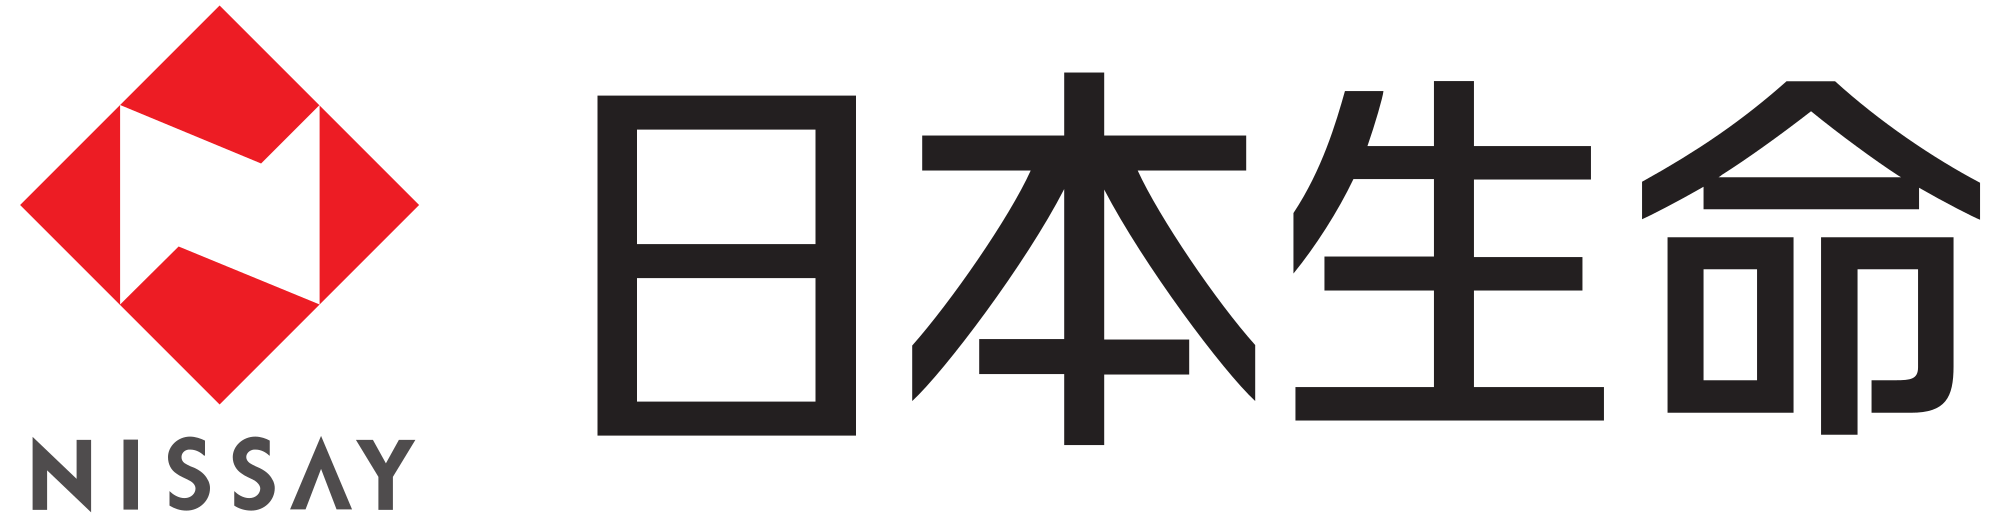 Nissay/Nippon Life Insurance Brand Logo